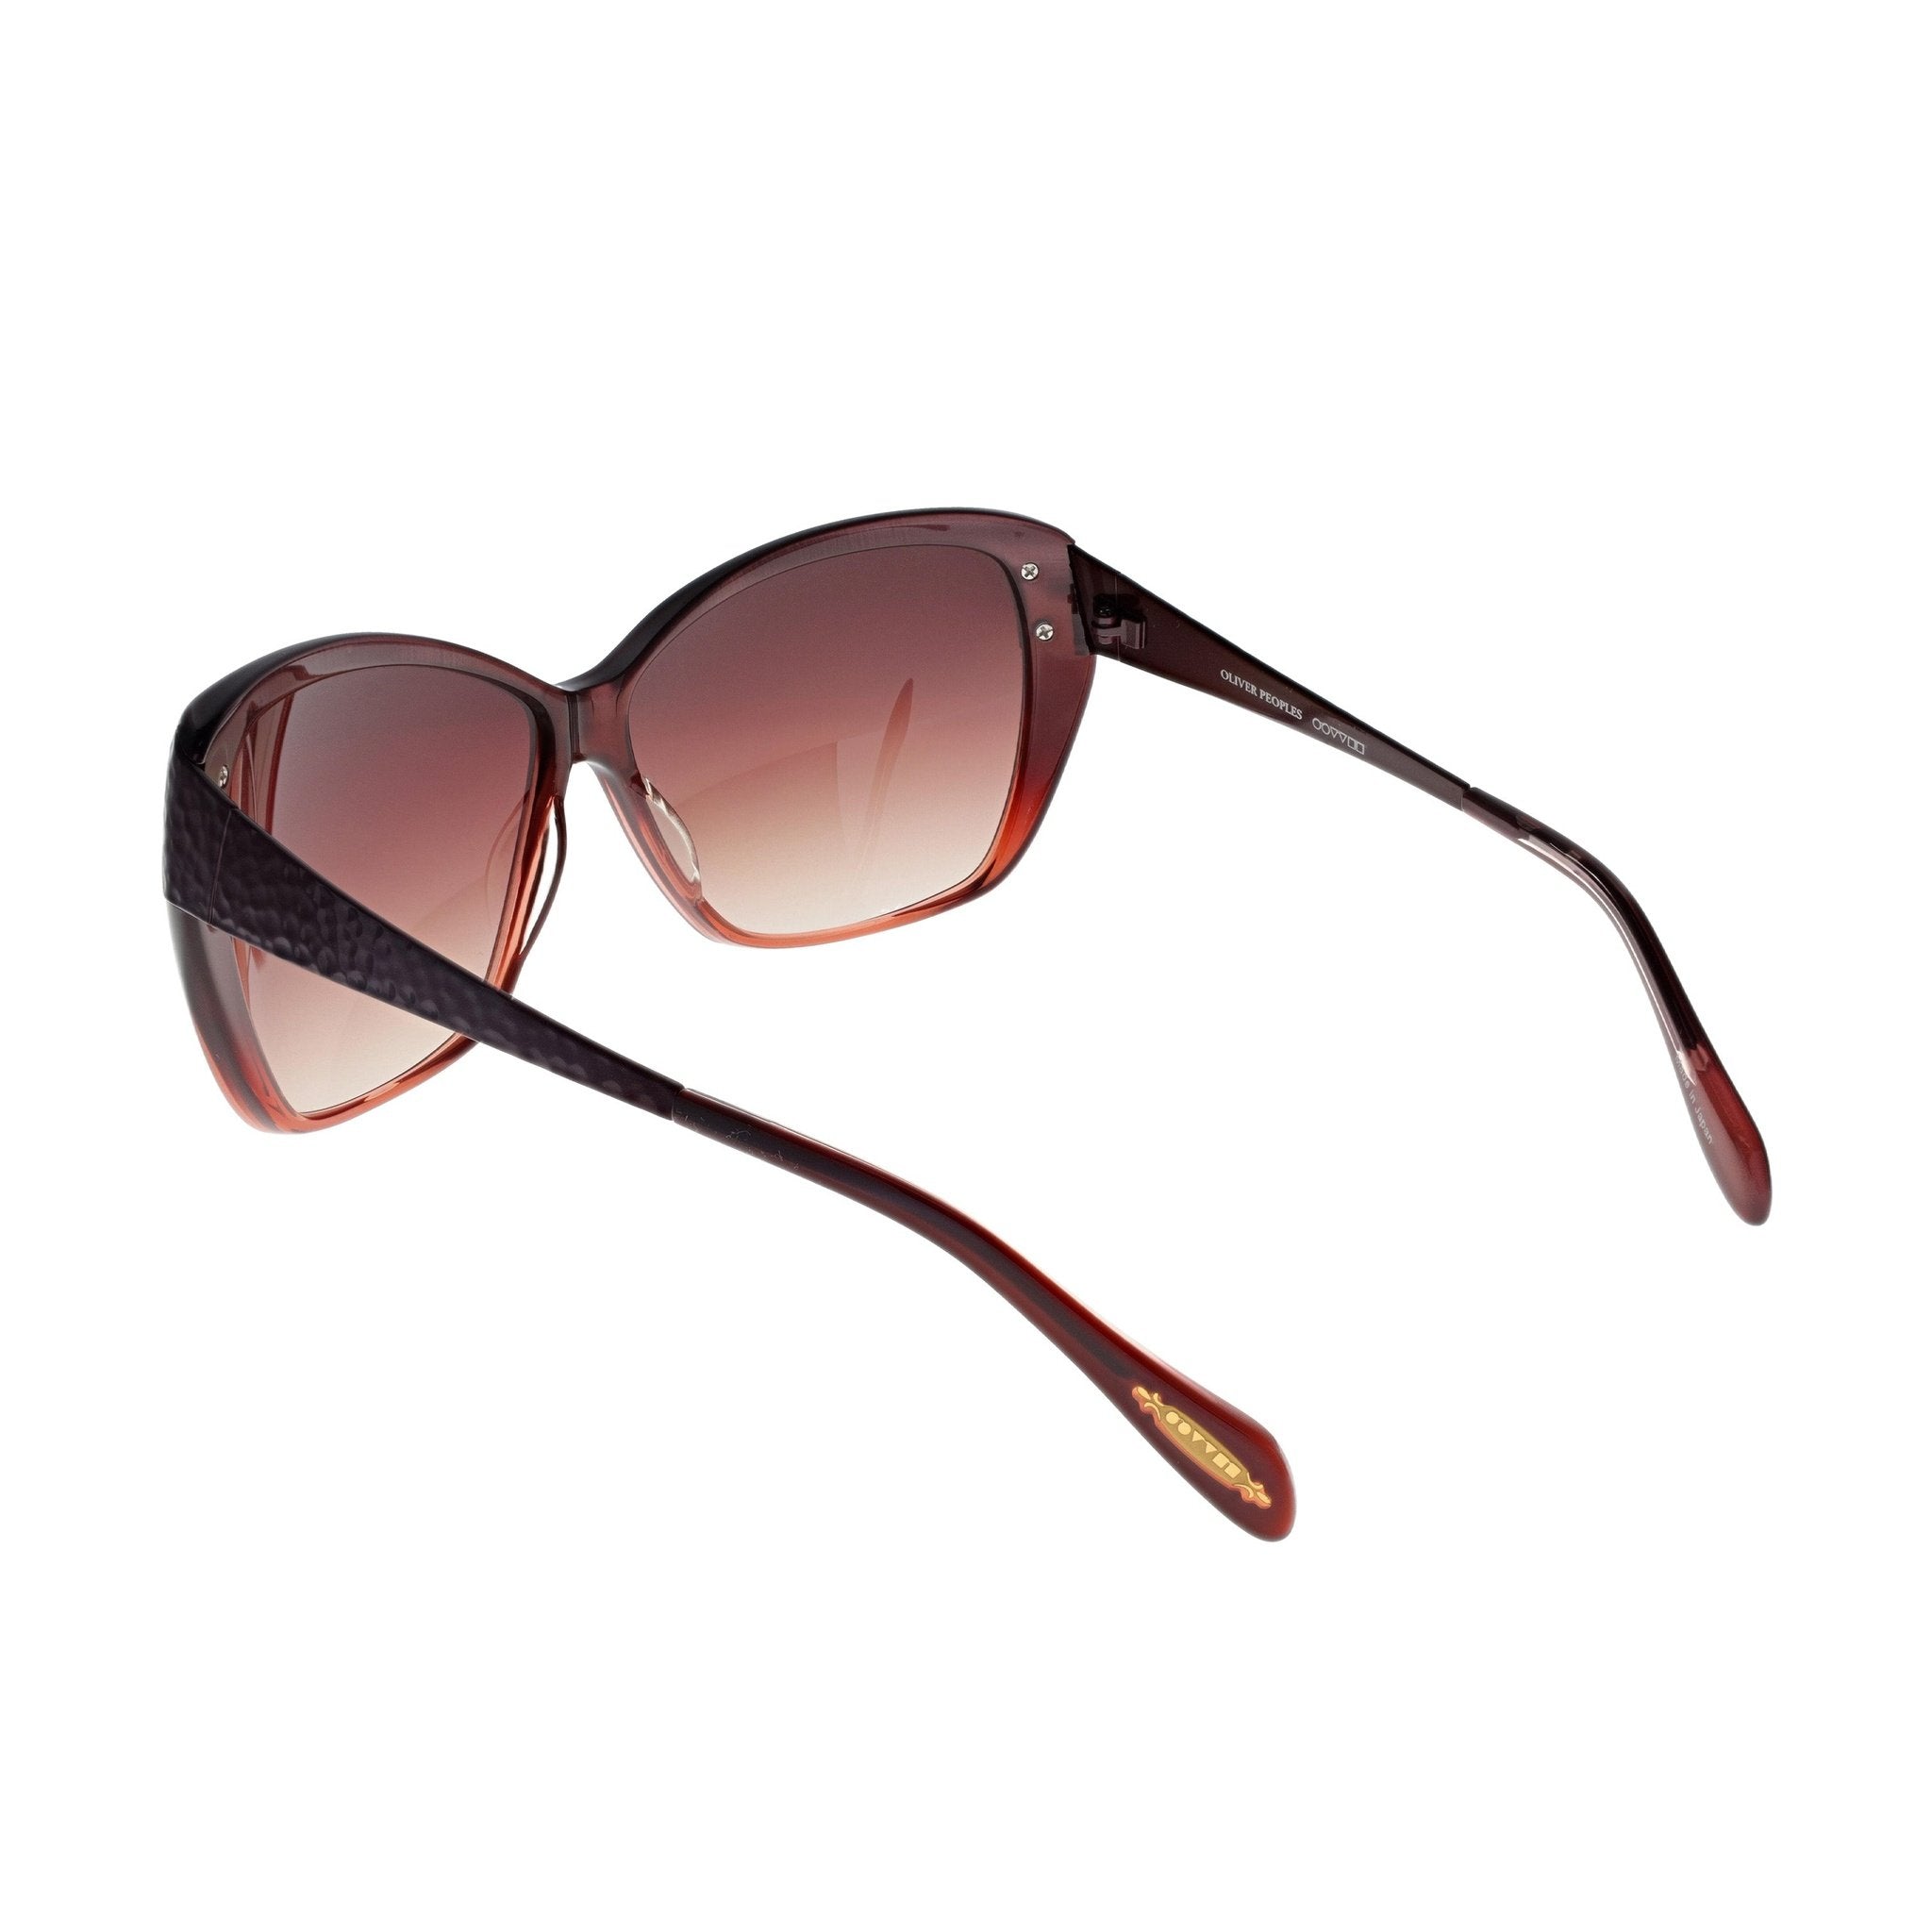 Oliver Peoples Skyla Sunglasses - Garnet